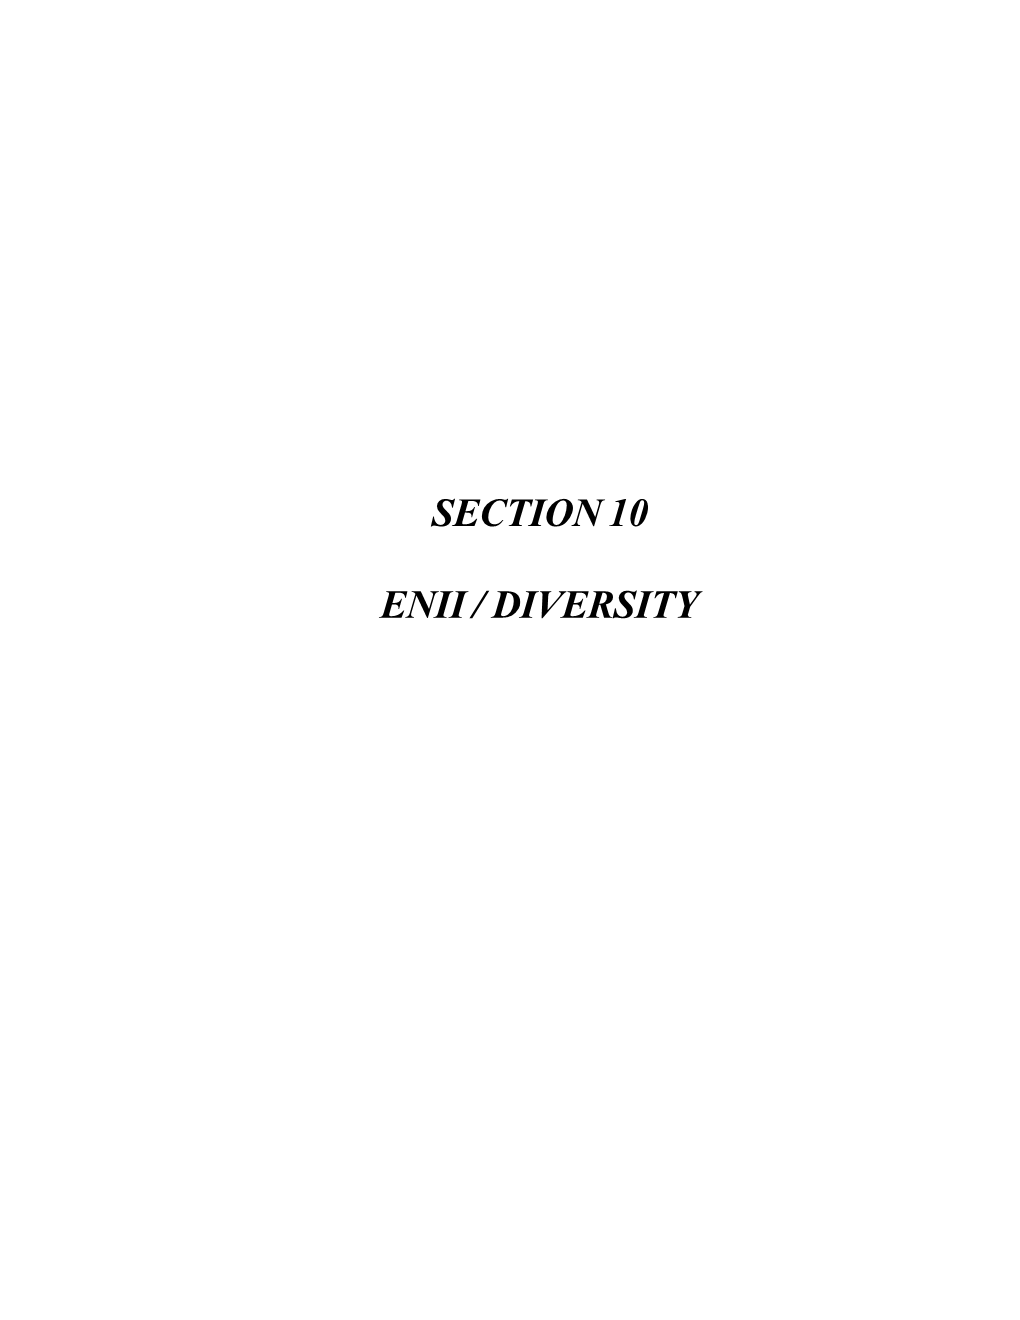 Section 10 Enii / Diversity